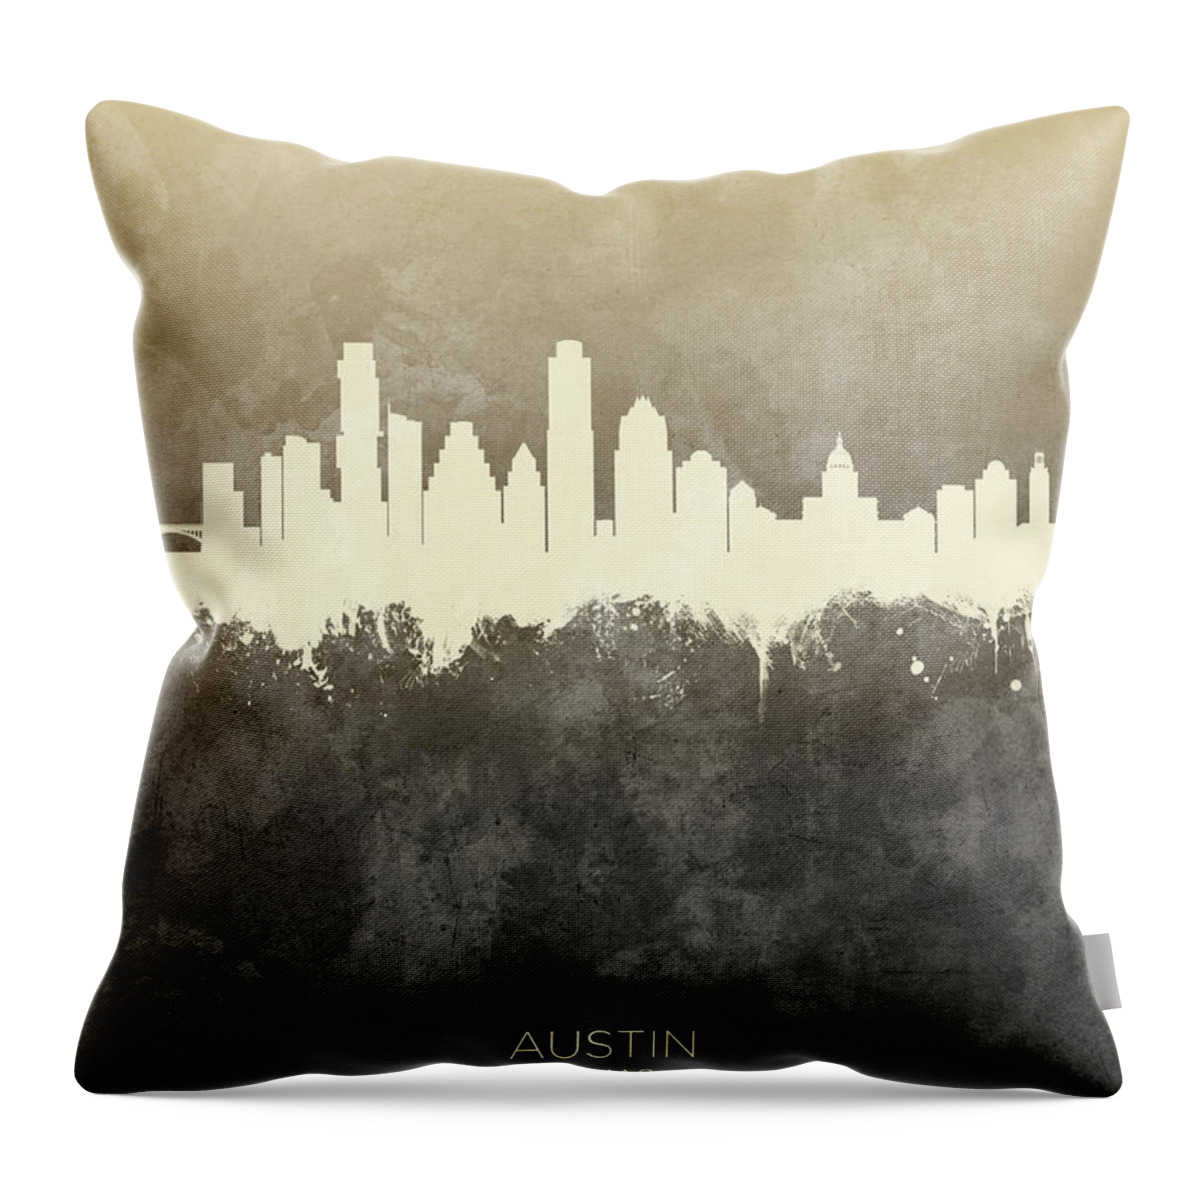 Austin Throw Pillow featuring the digital art Austin Texas Skyline #18 by Michael Tompsett